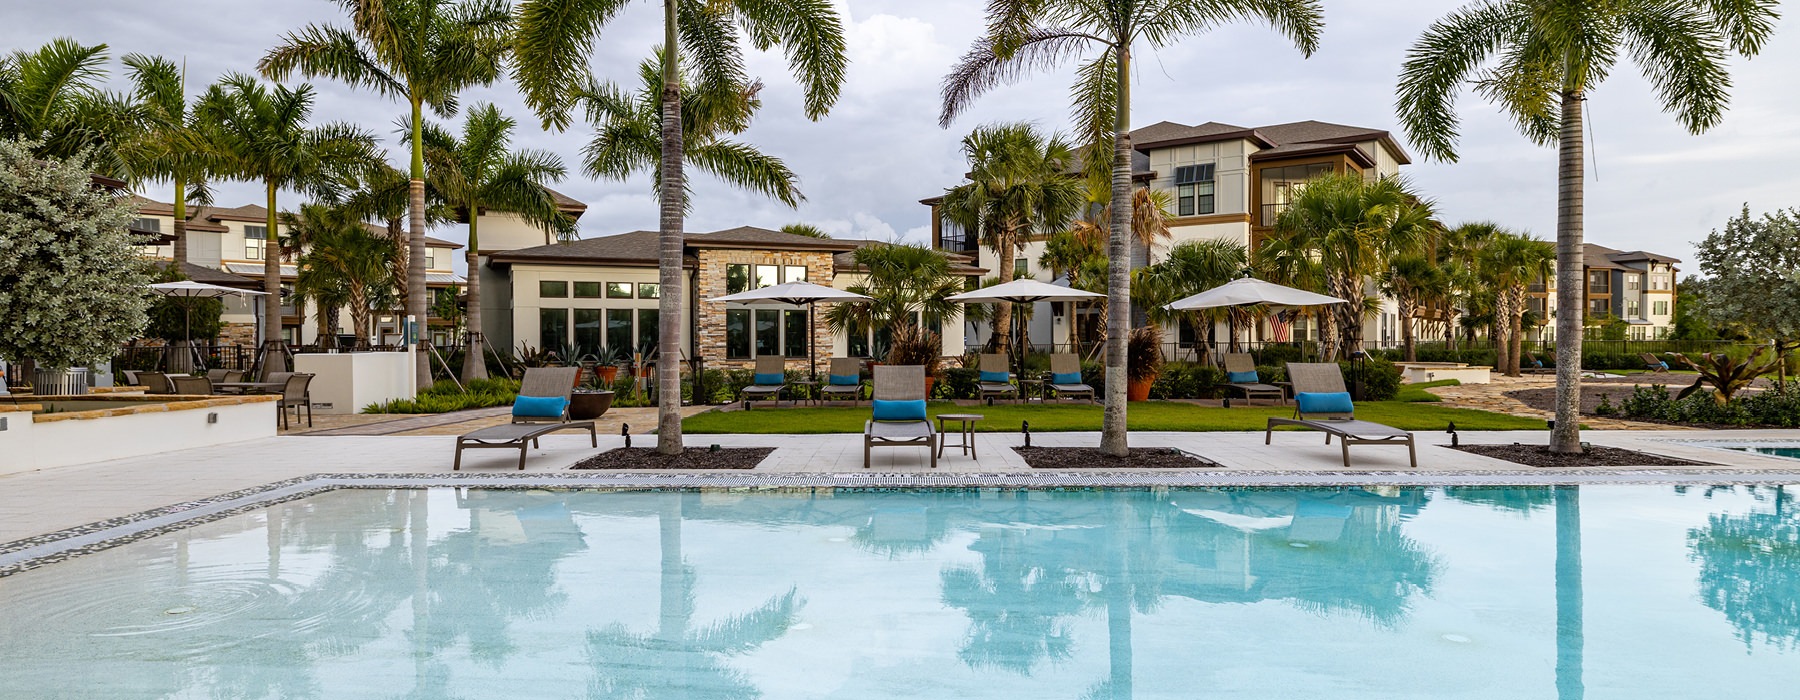 Modern zero-entry pool with surrounding palm trees at Ridgelake Apartments in Sarasota, FL